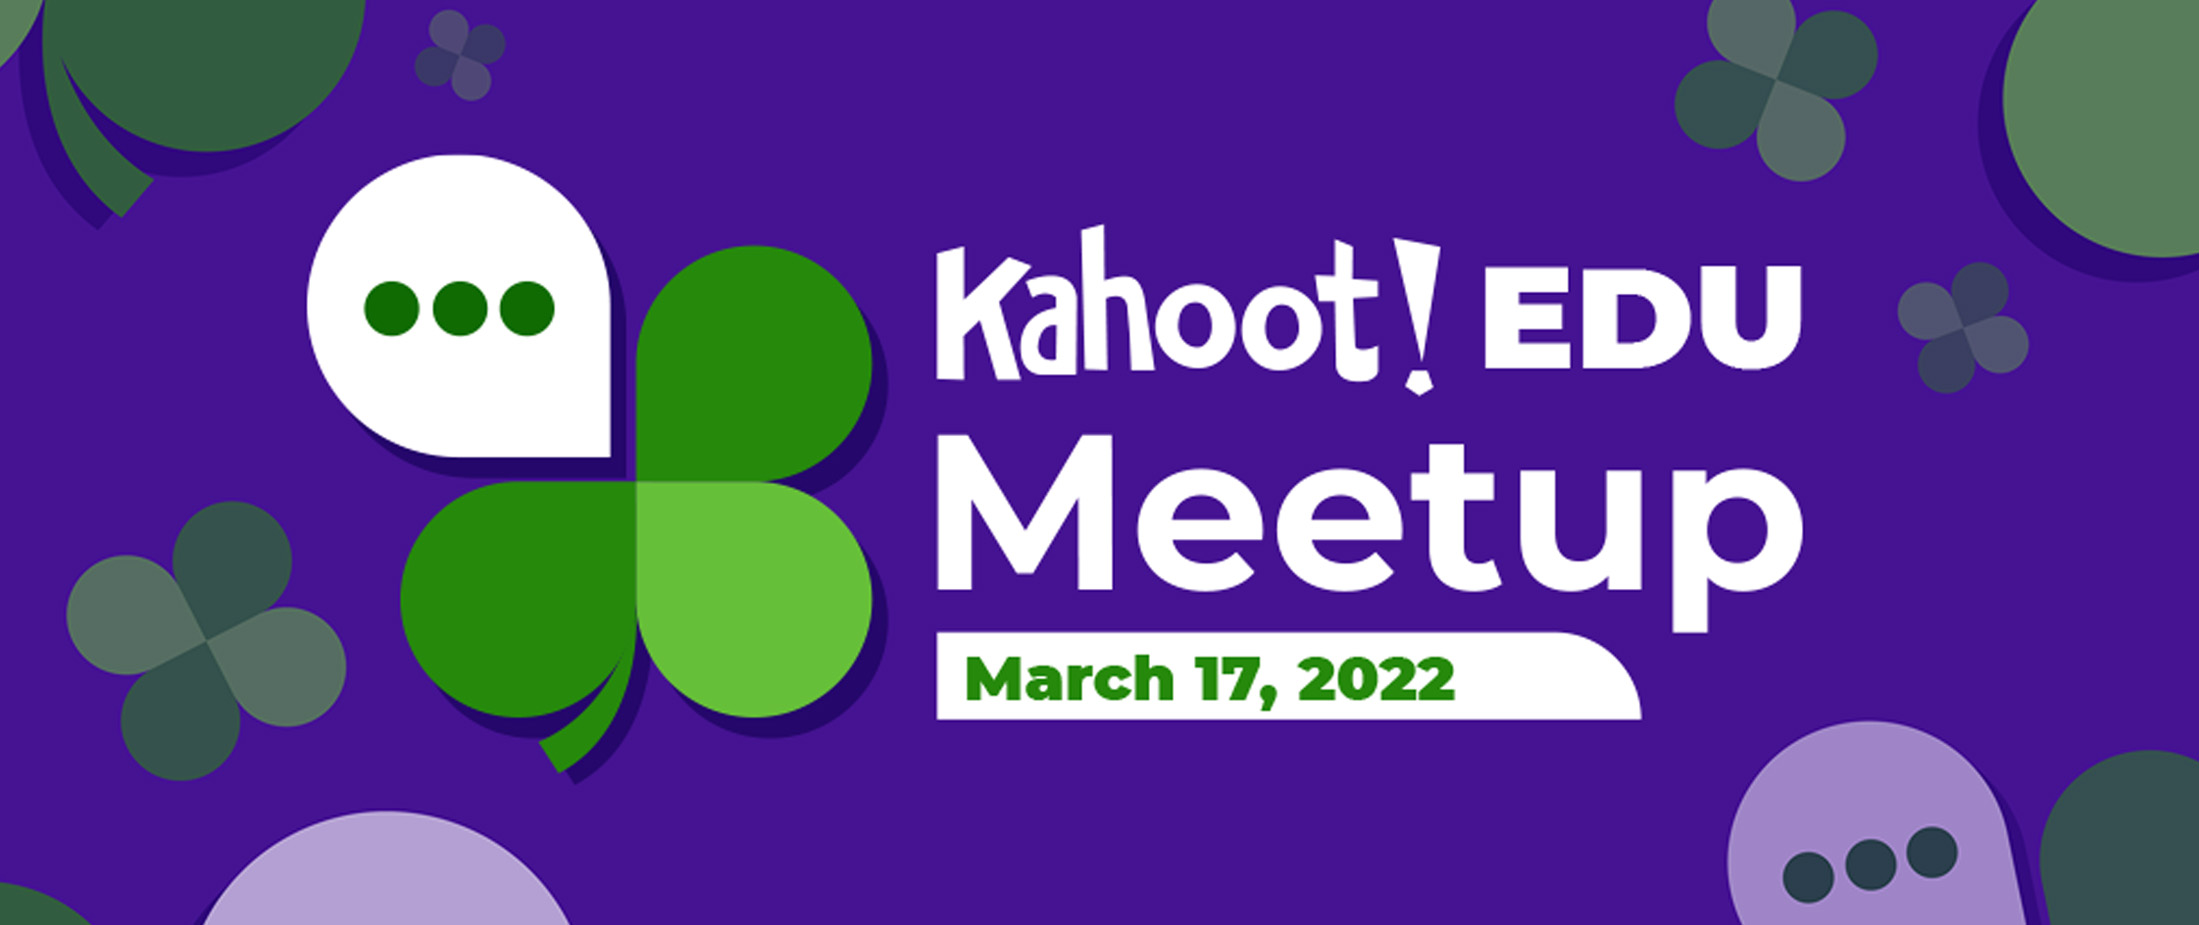 Join the Kahoot! Meetup